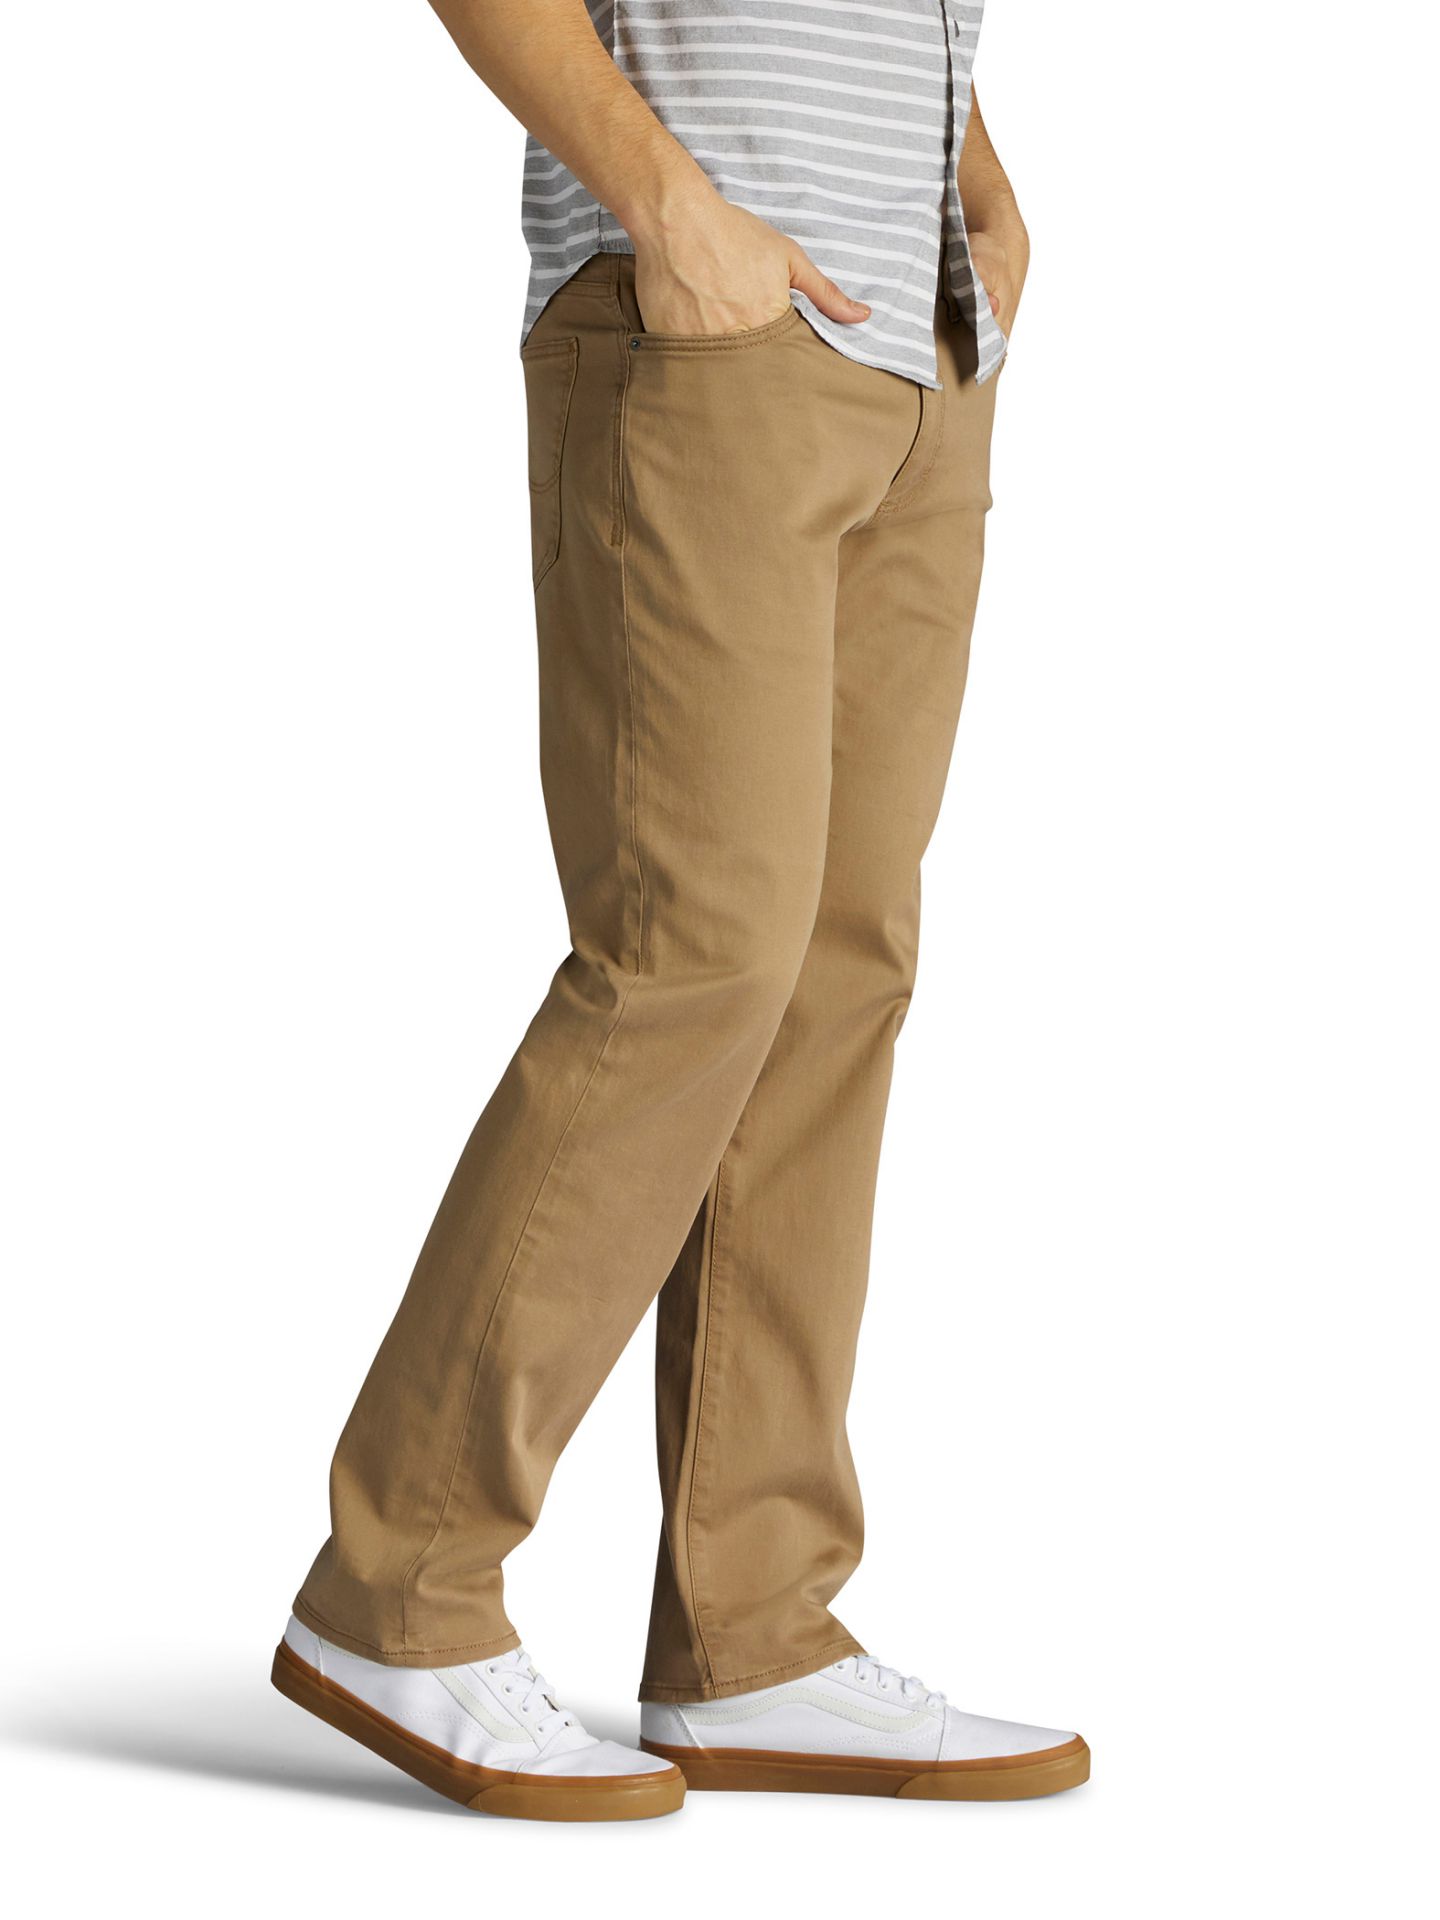 sale eBay Motion Midrise Khaki 30x32 Lee Cougar Pants Stretch 5 Extreme online Straight | Pocket for